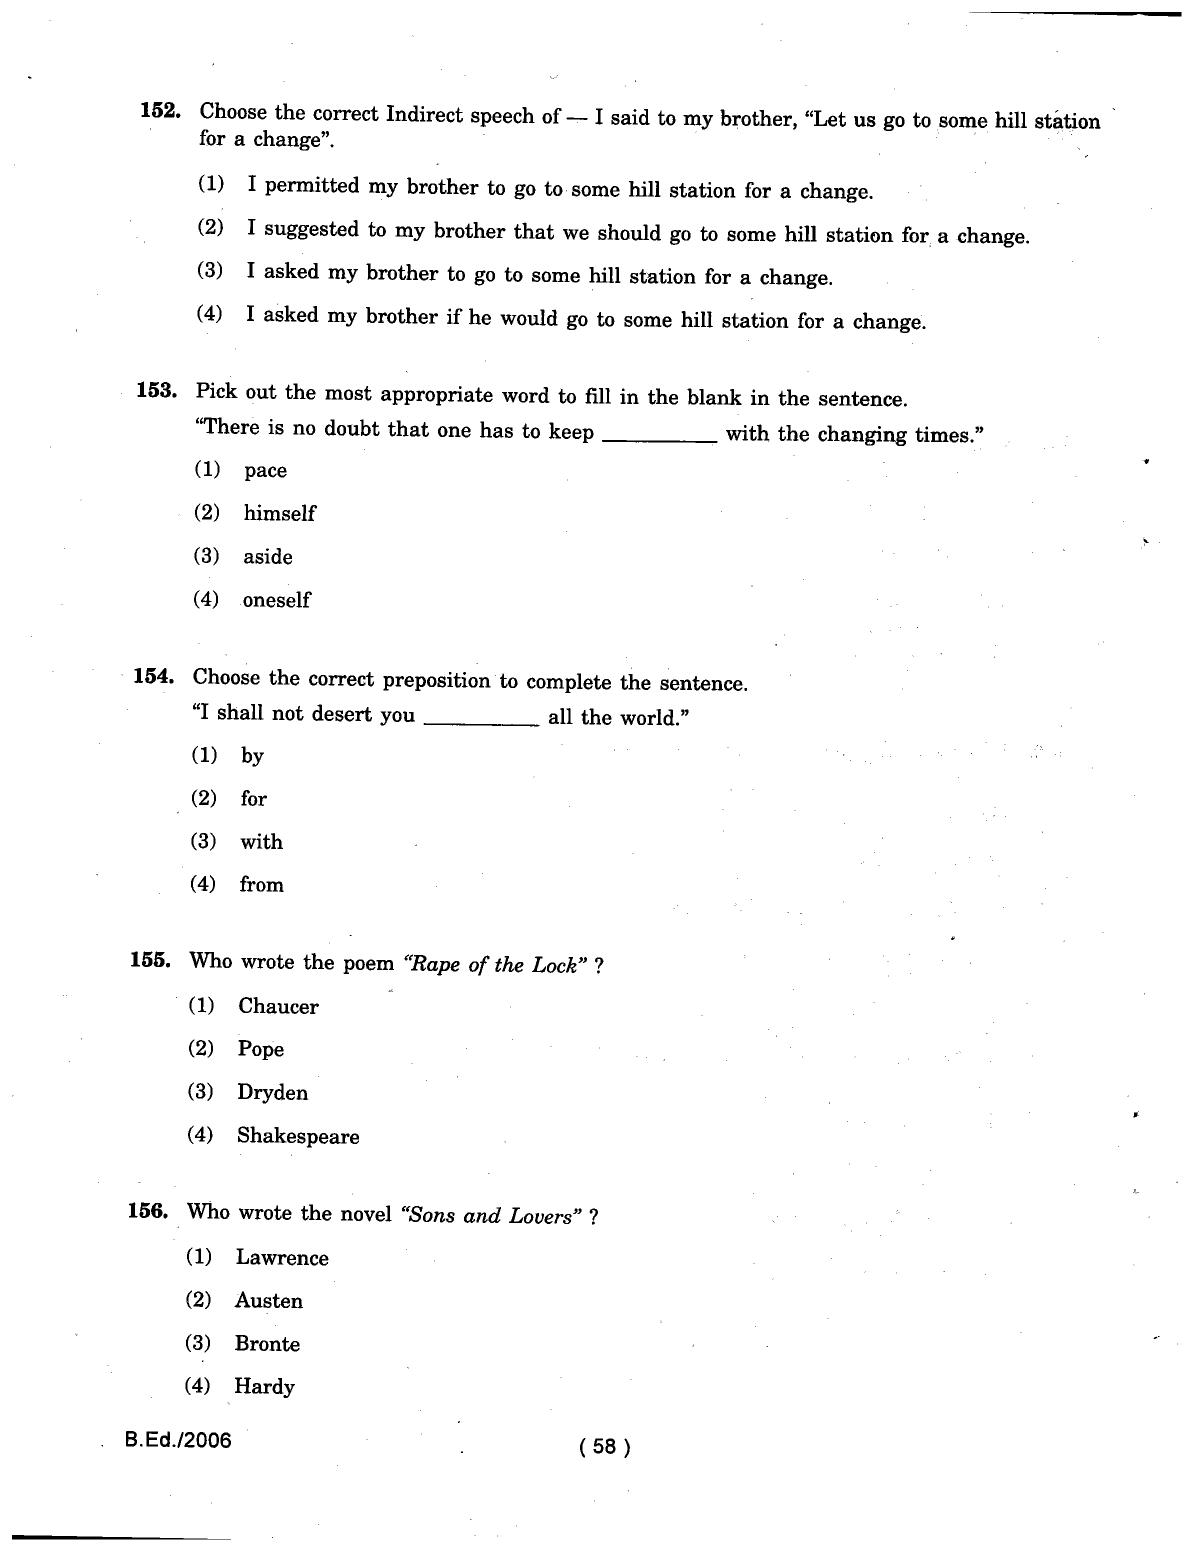 IGNOU B.Ed 2006 Question Paper - Page 58